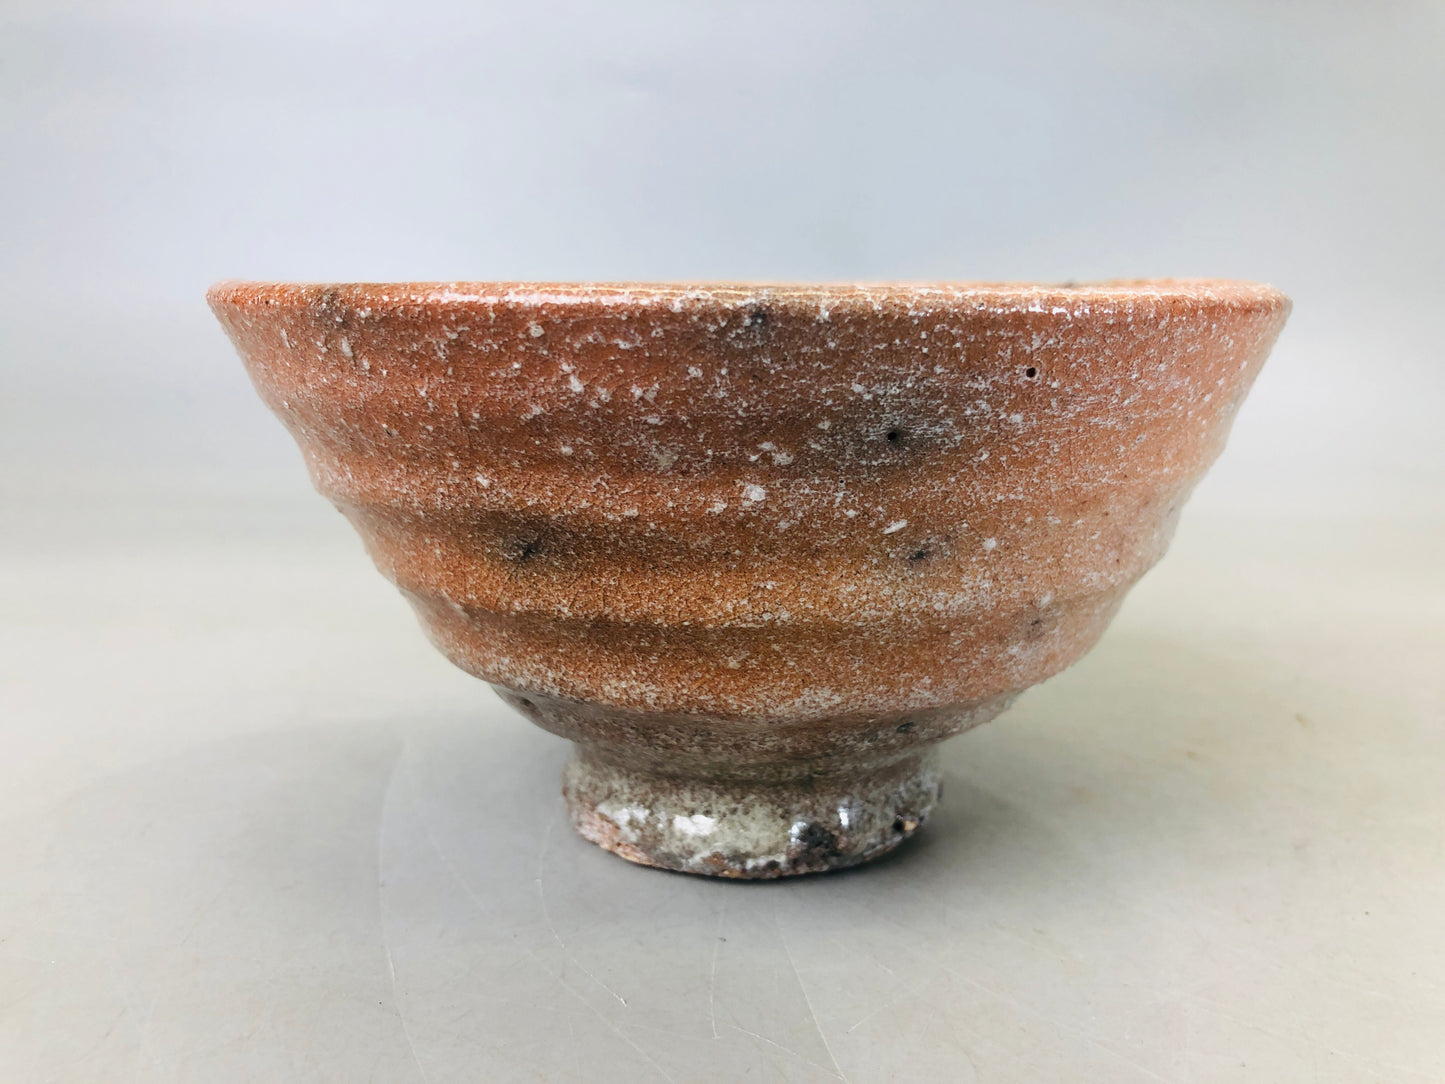 Y6077 [VIDEO] CHAWAN Goryeo signed box Korea bowl tea ceremony antique Korean pottery